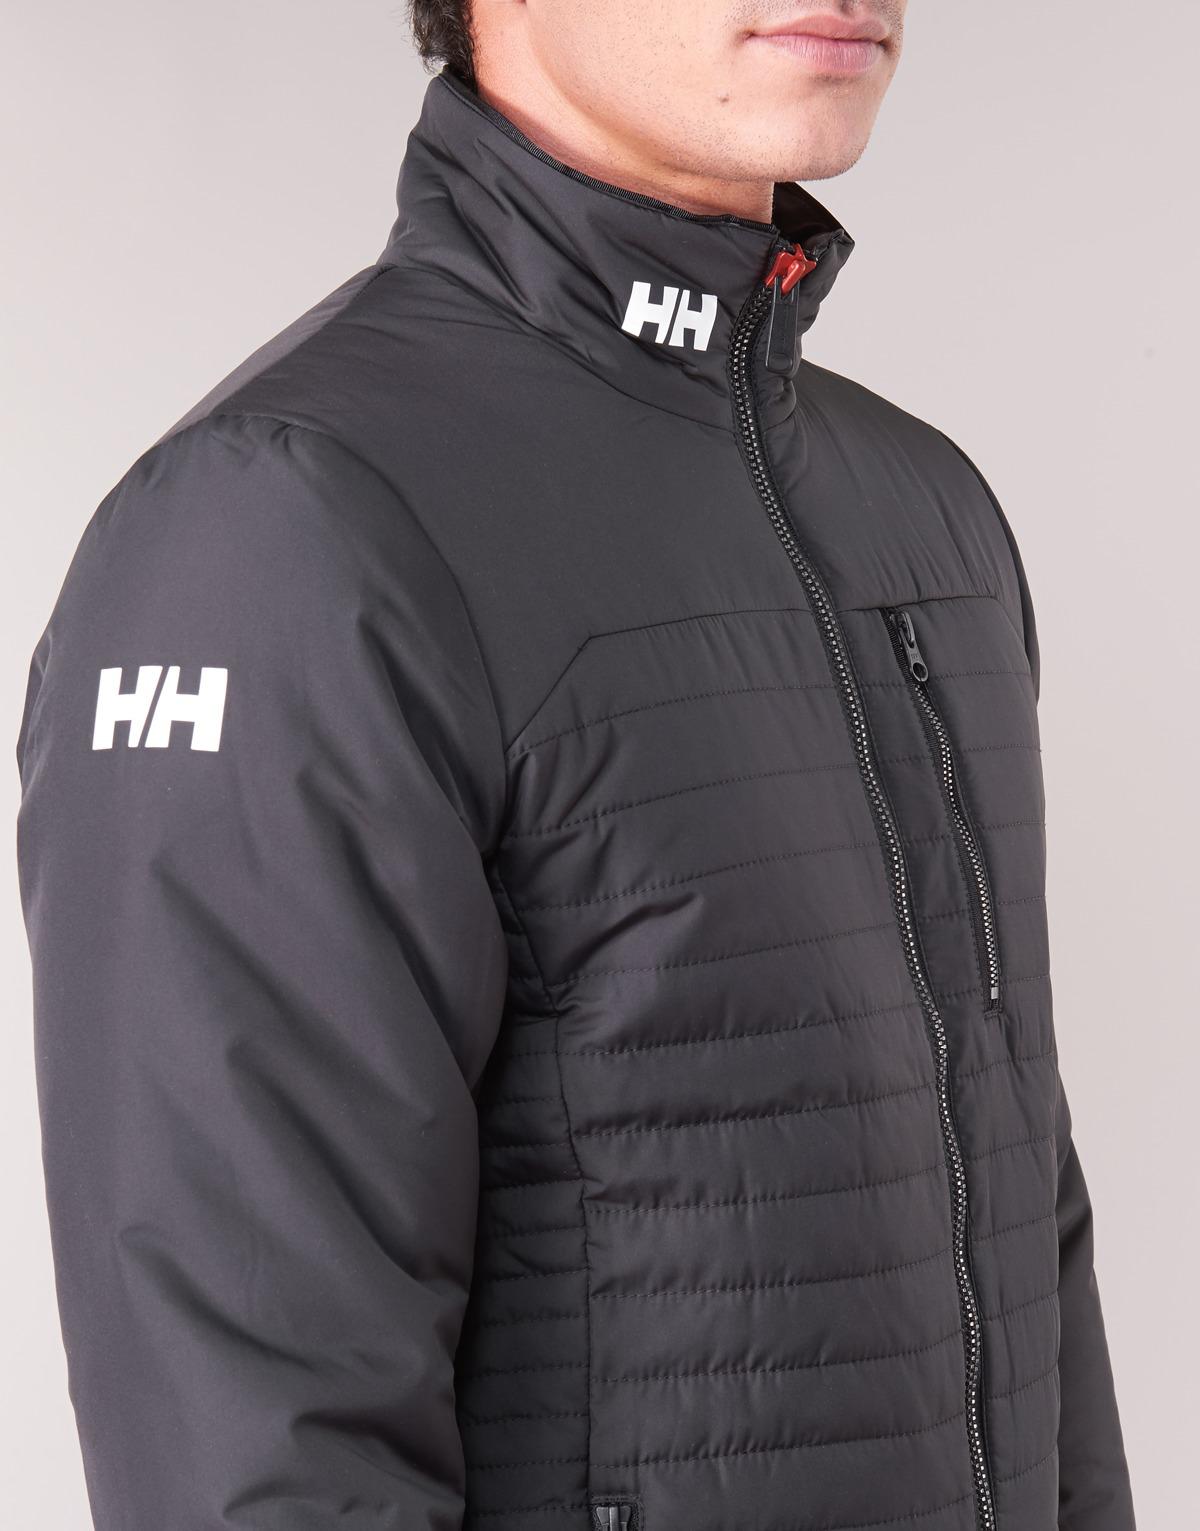 Helly Hansen Crew Insulator Jacket Jacket in Black for Men - Save 23% - Lyst